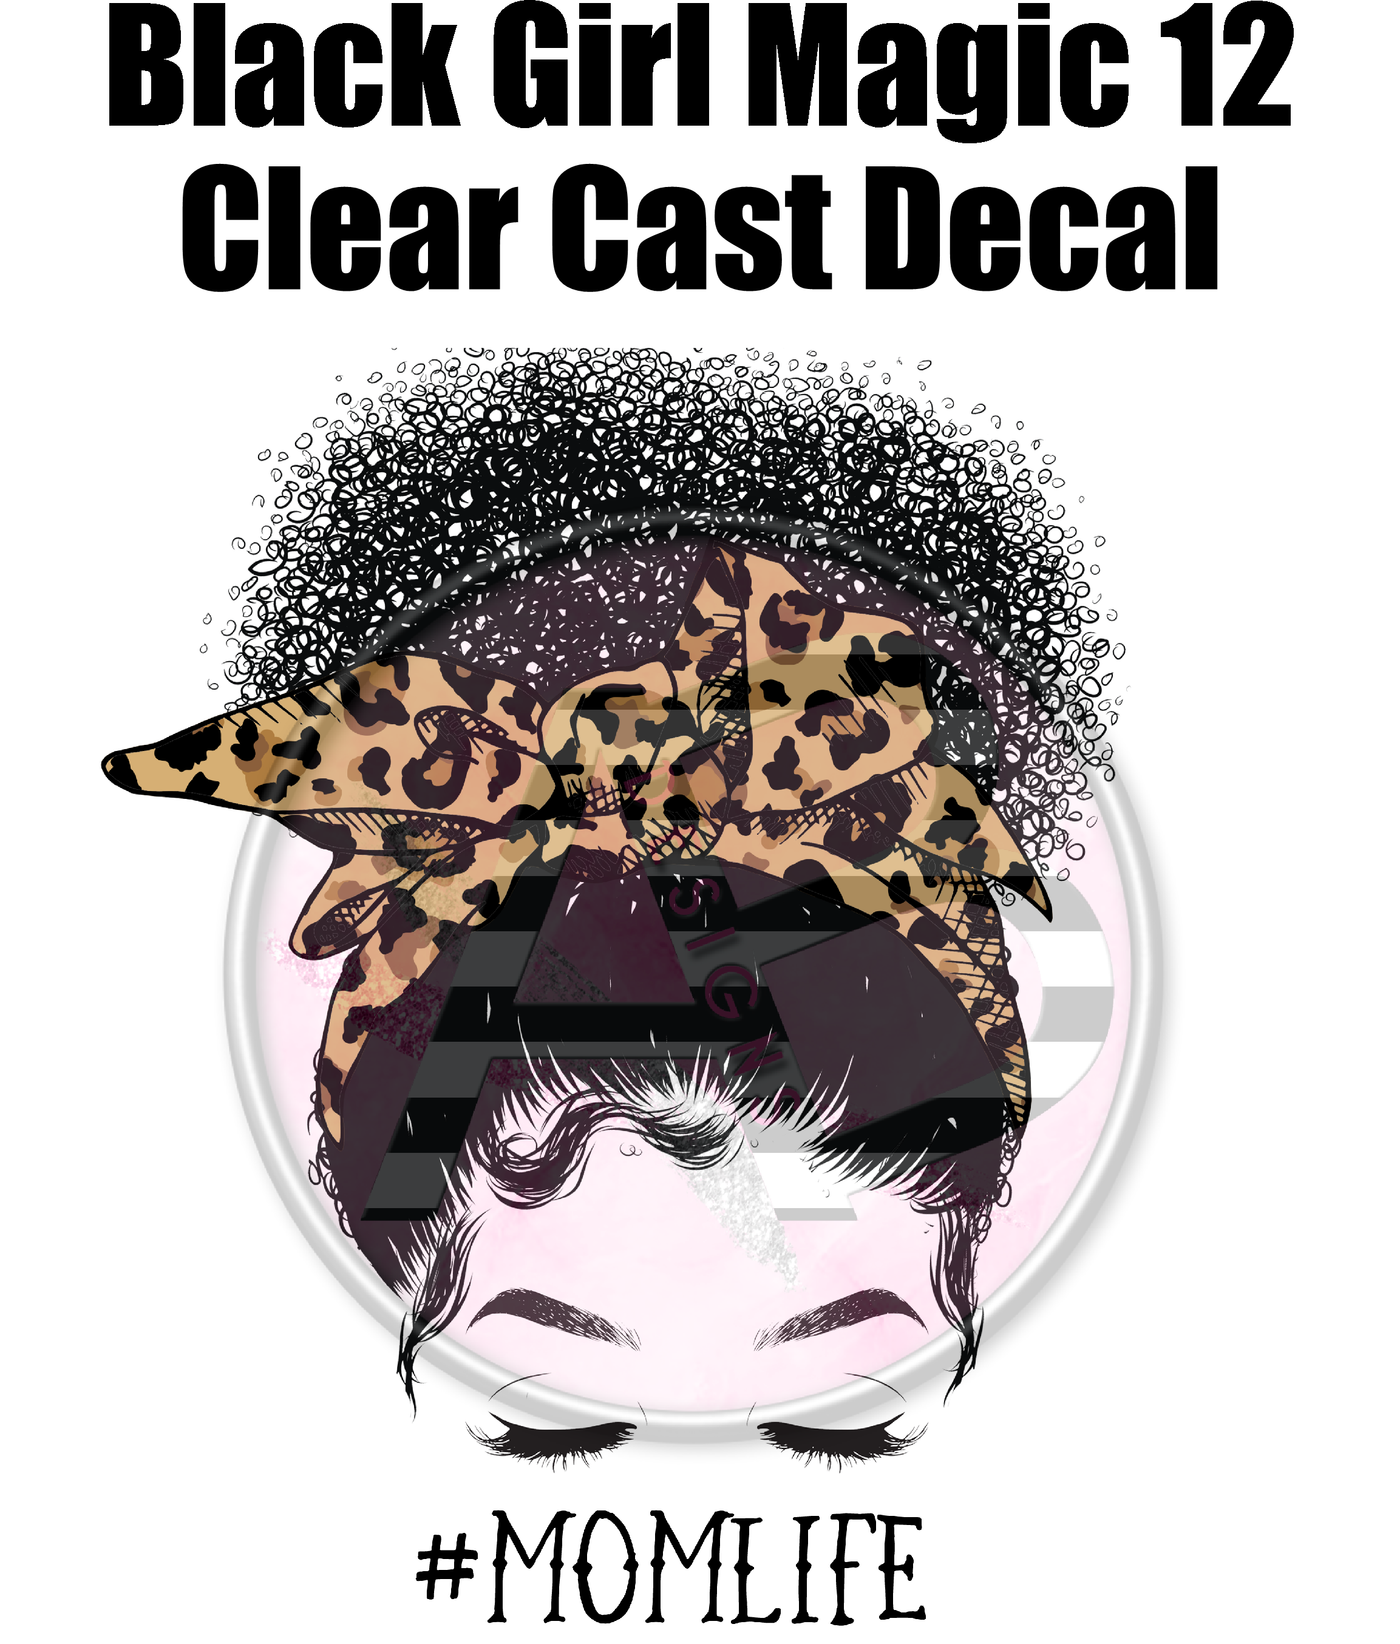 Black Girl Magic 12 - Clear Cast Decal